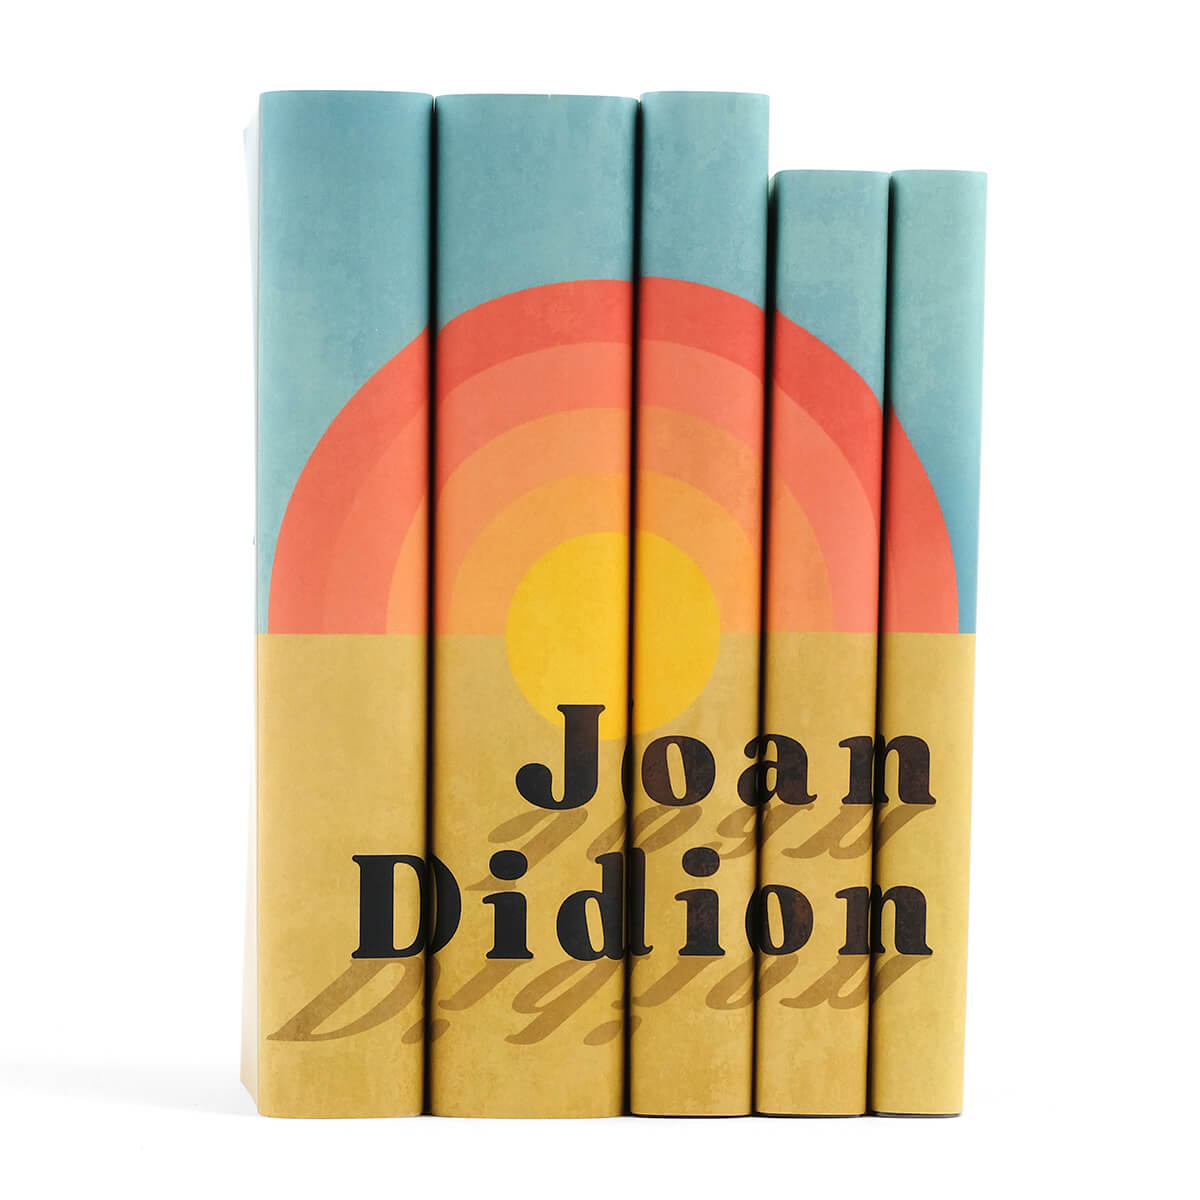 Penguin Classics Series in Sets of 10 – Juniper Custom